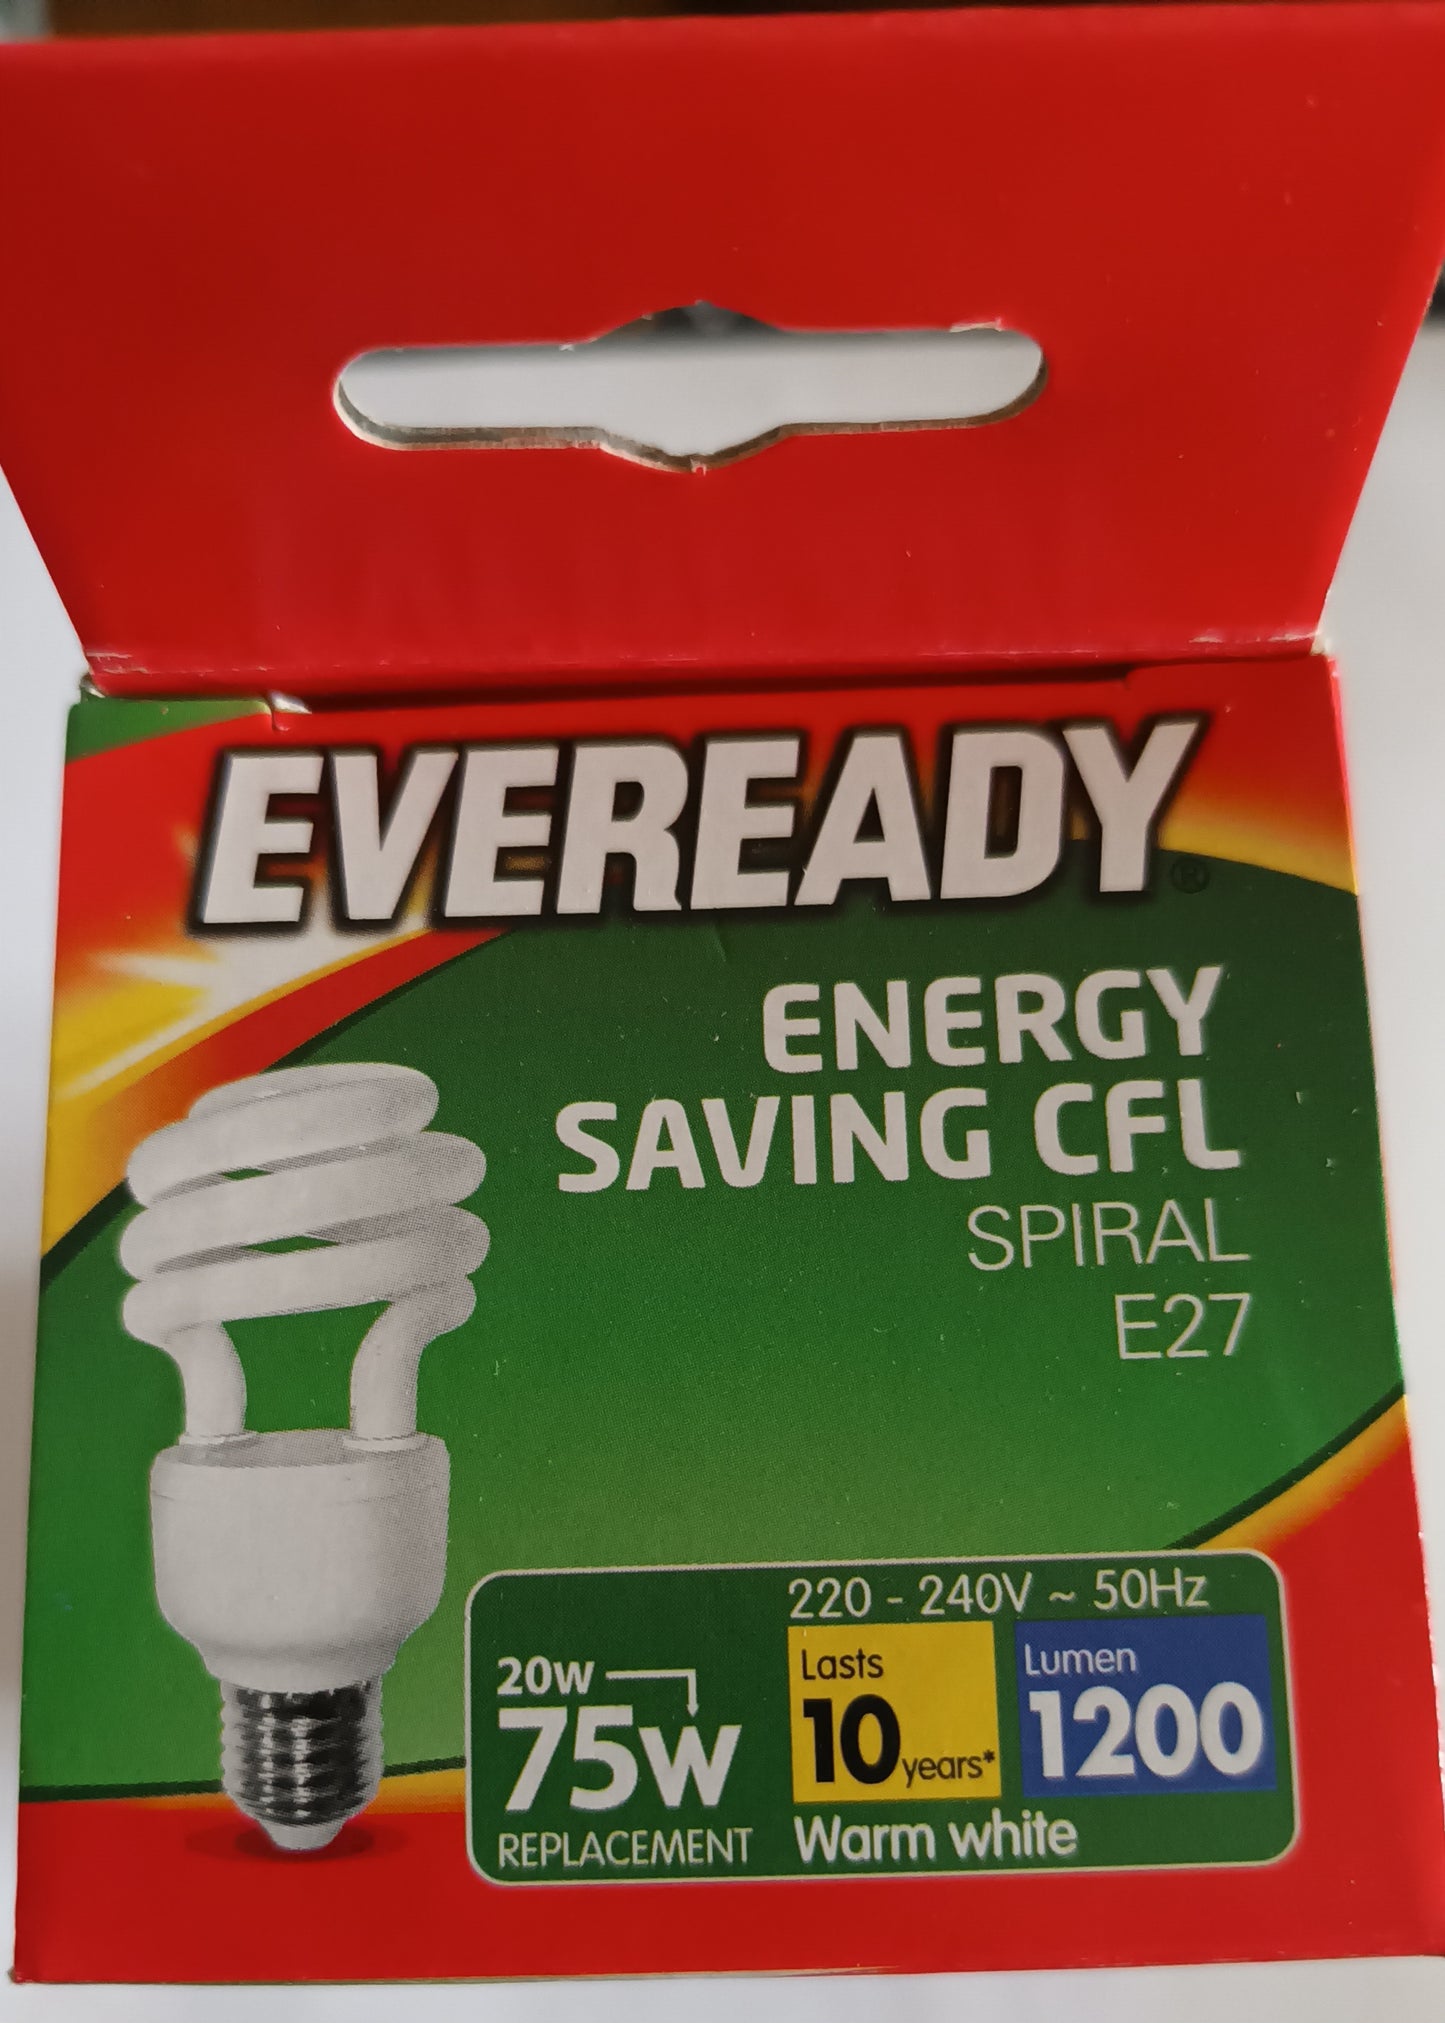 20W Energy Saving CFL Spiral E27 / ES Warm White by Eveready